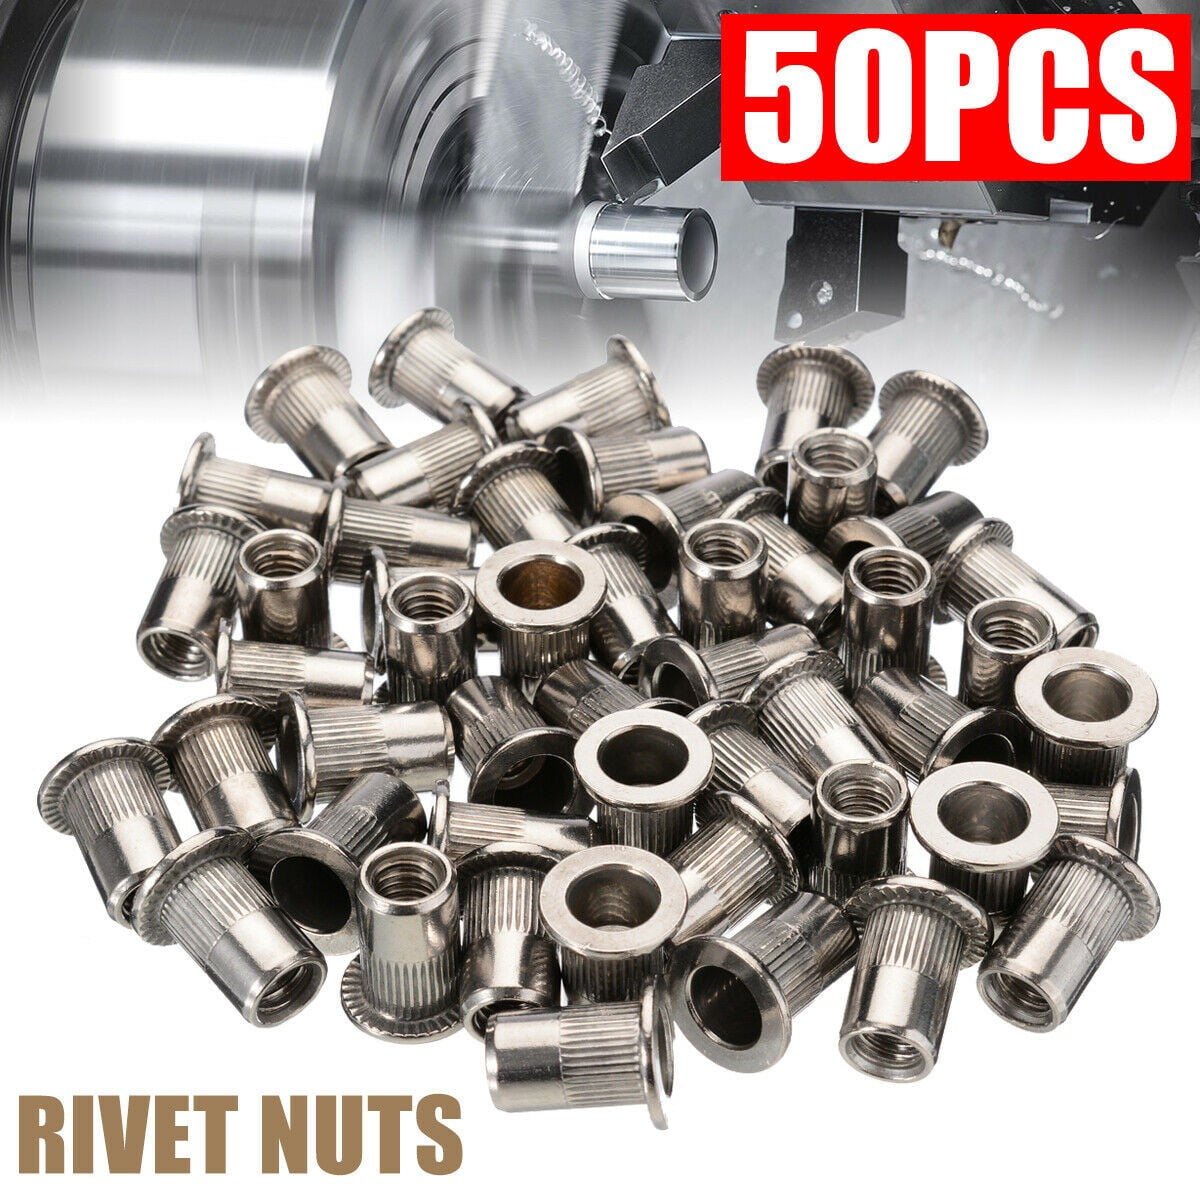 M6 Rivet Nuts Flat Head Insert Threaded Nutsert Knurled Metric Stainless Steel